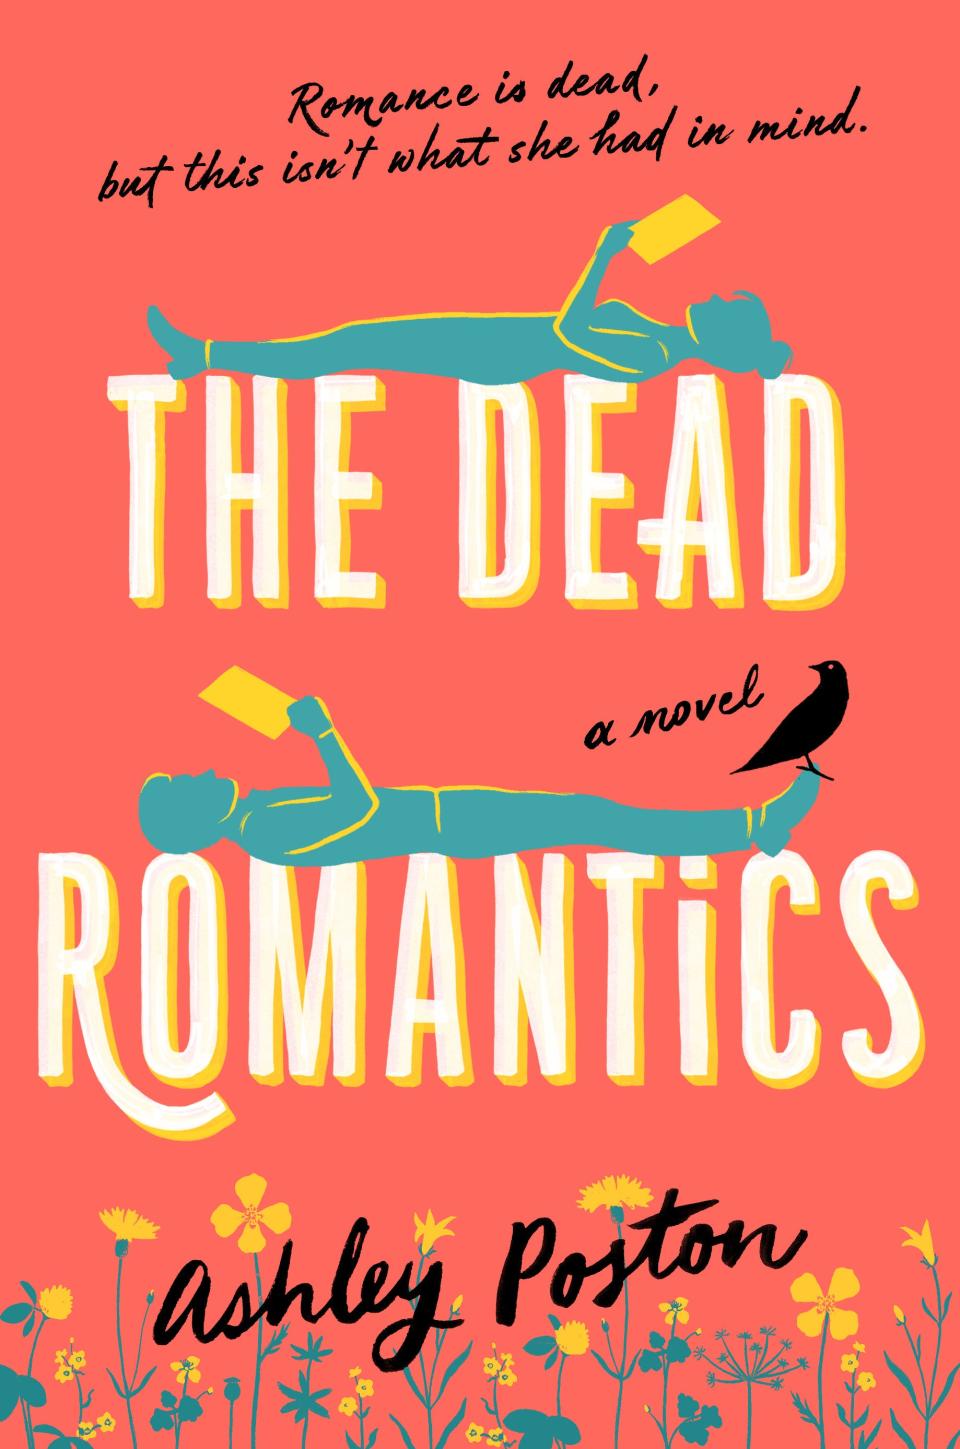 "The Dead Romantics," by Ashley Poston